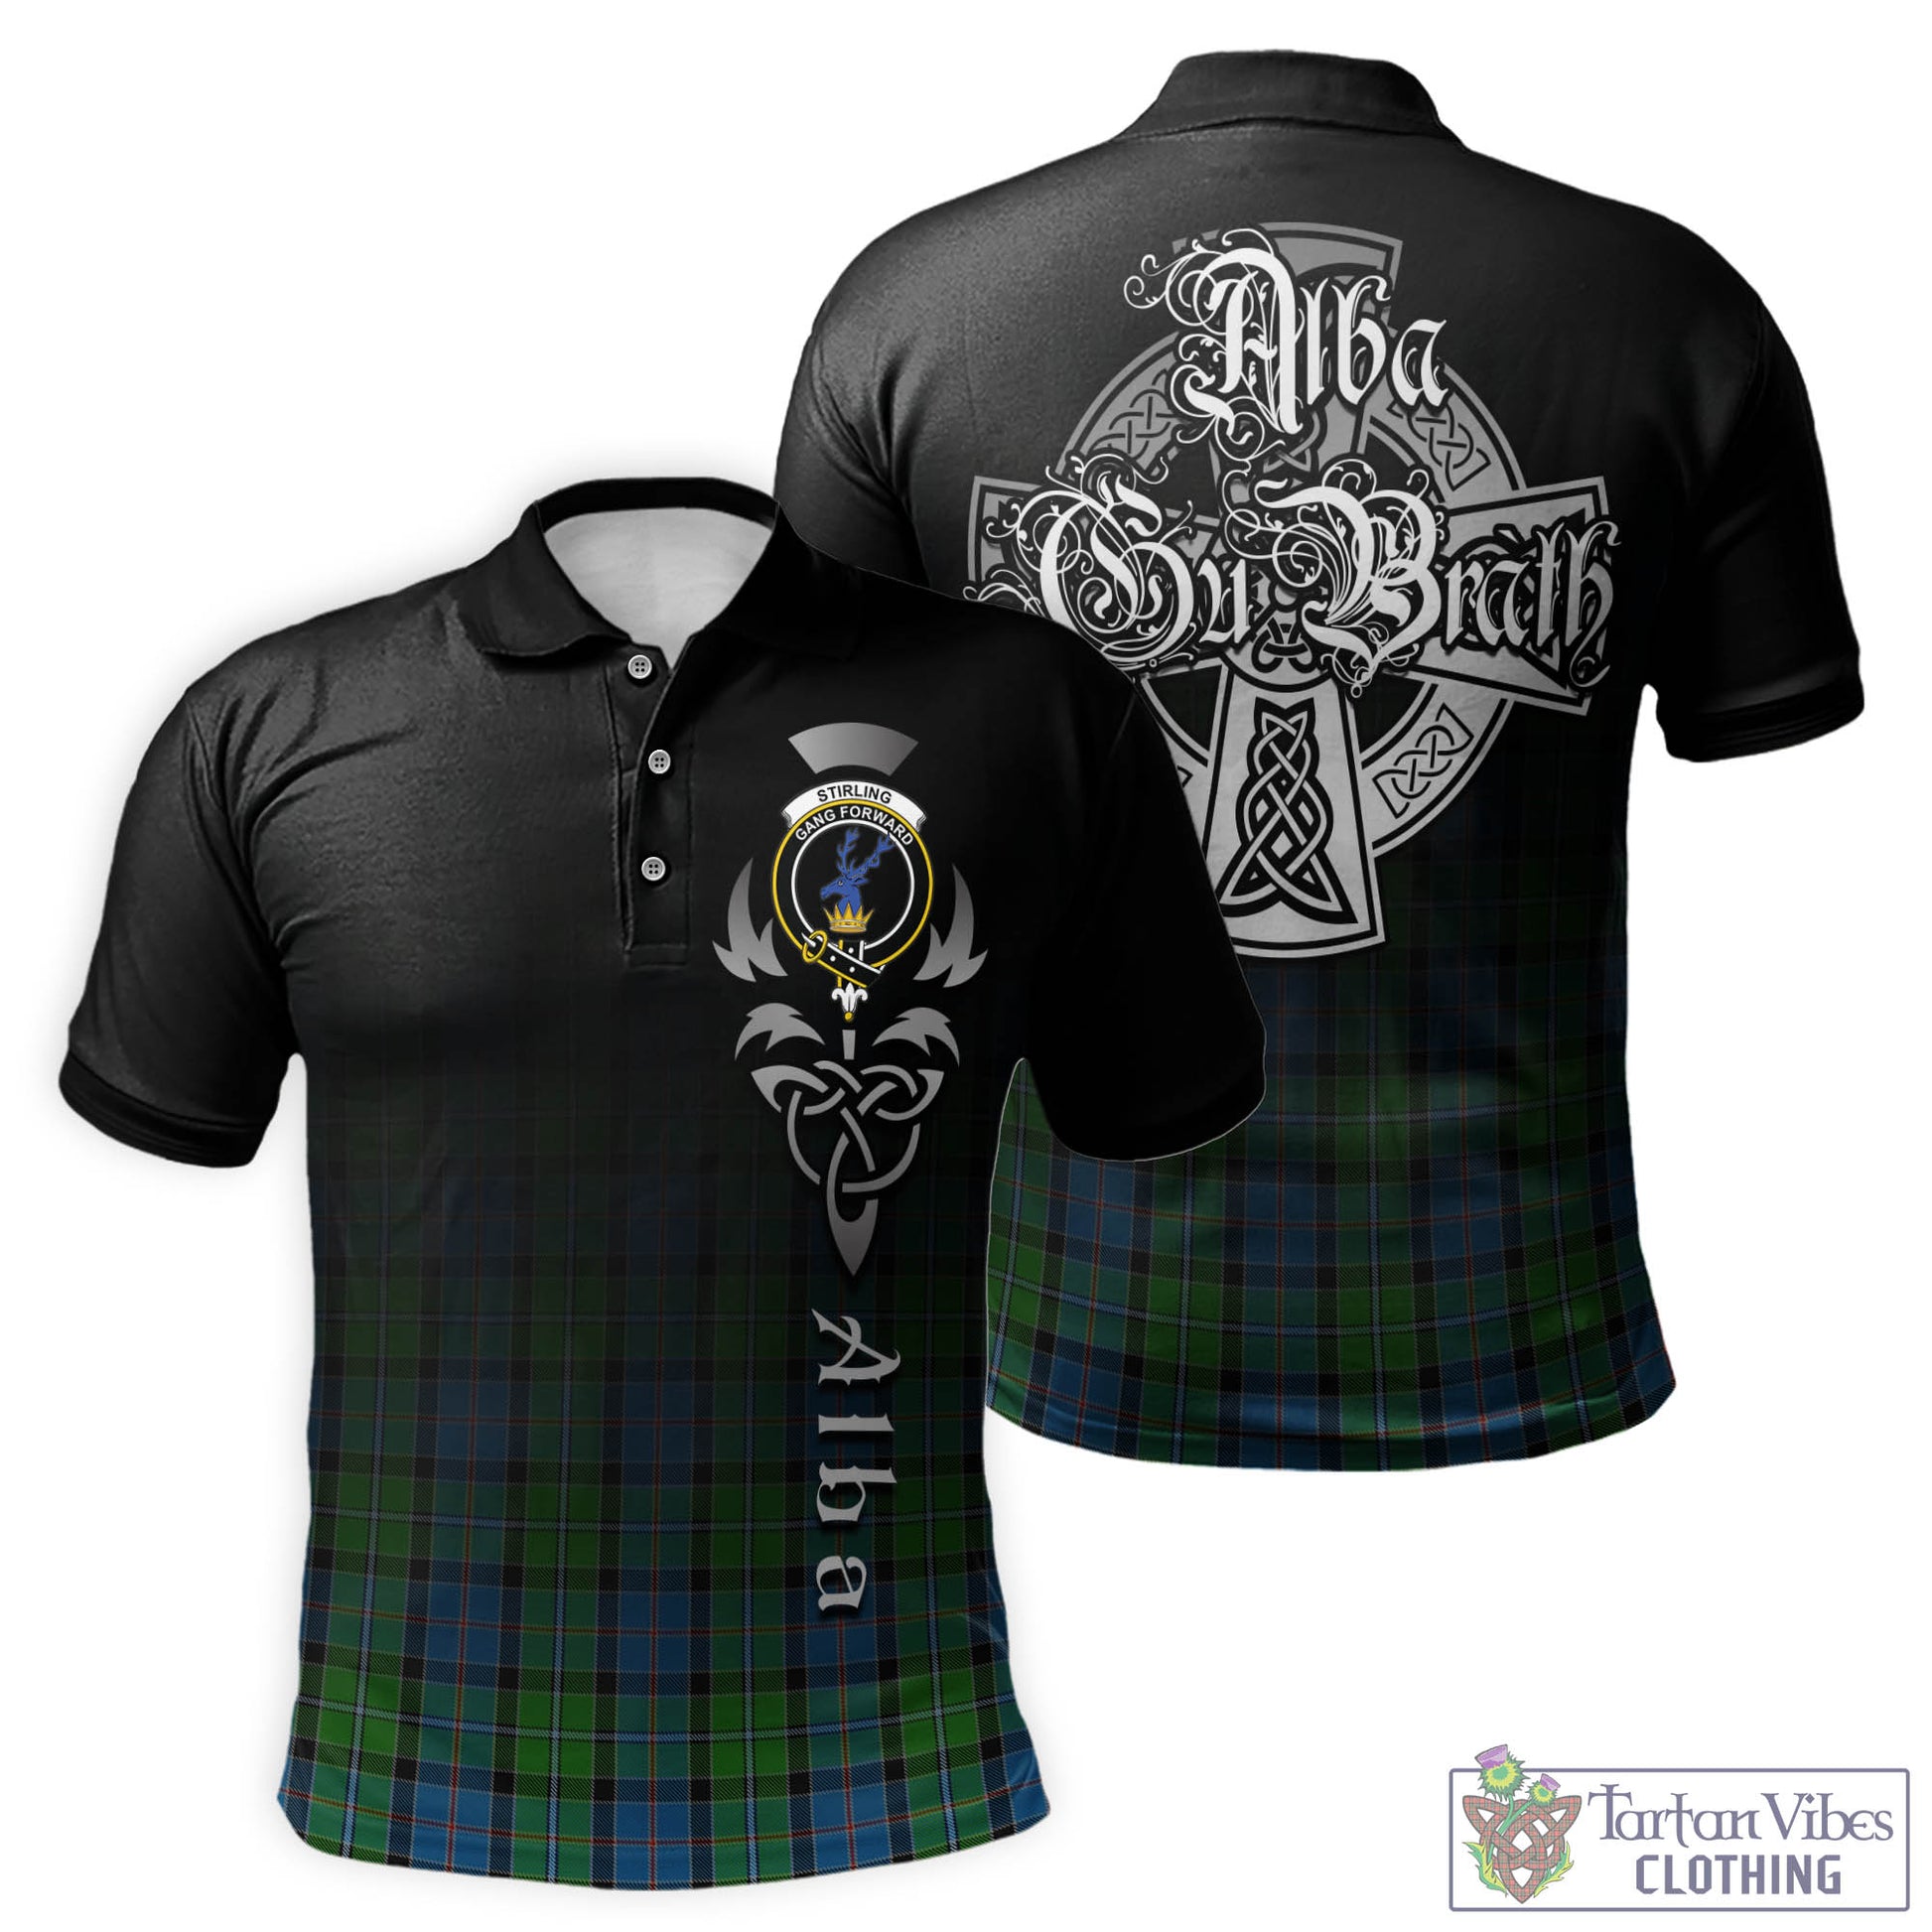 Tartan Vibes Clothing Stirling Tartan Polo Shirt Featuring Alba Gu Brath Family Crest Celtic Inspired